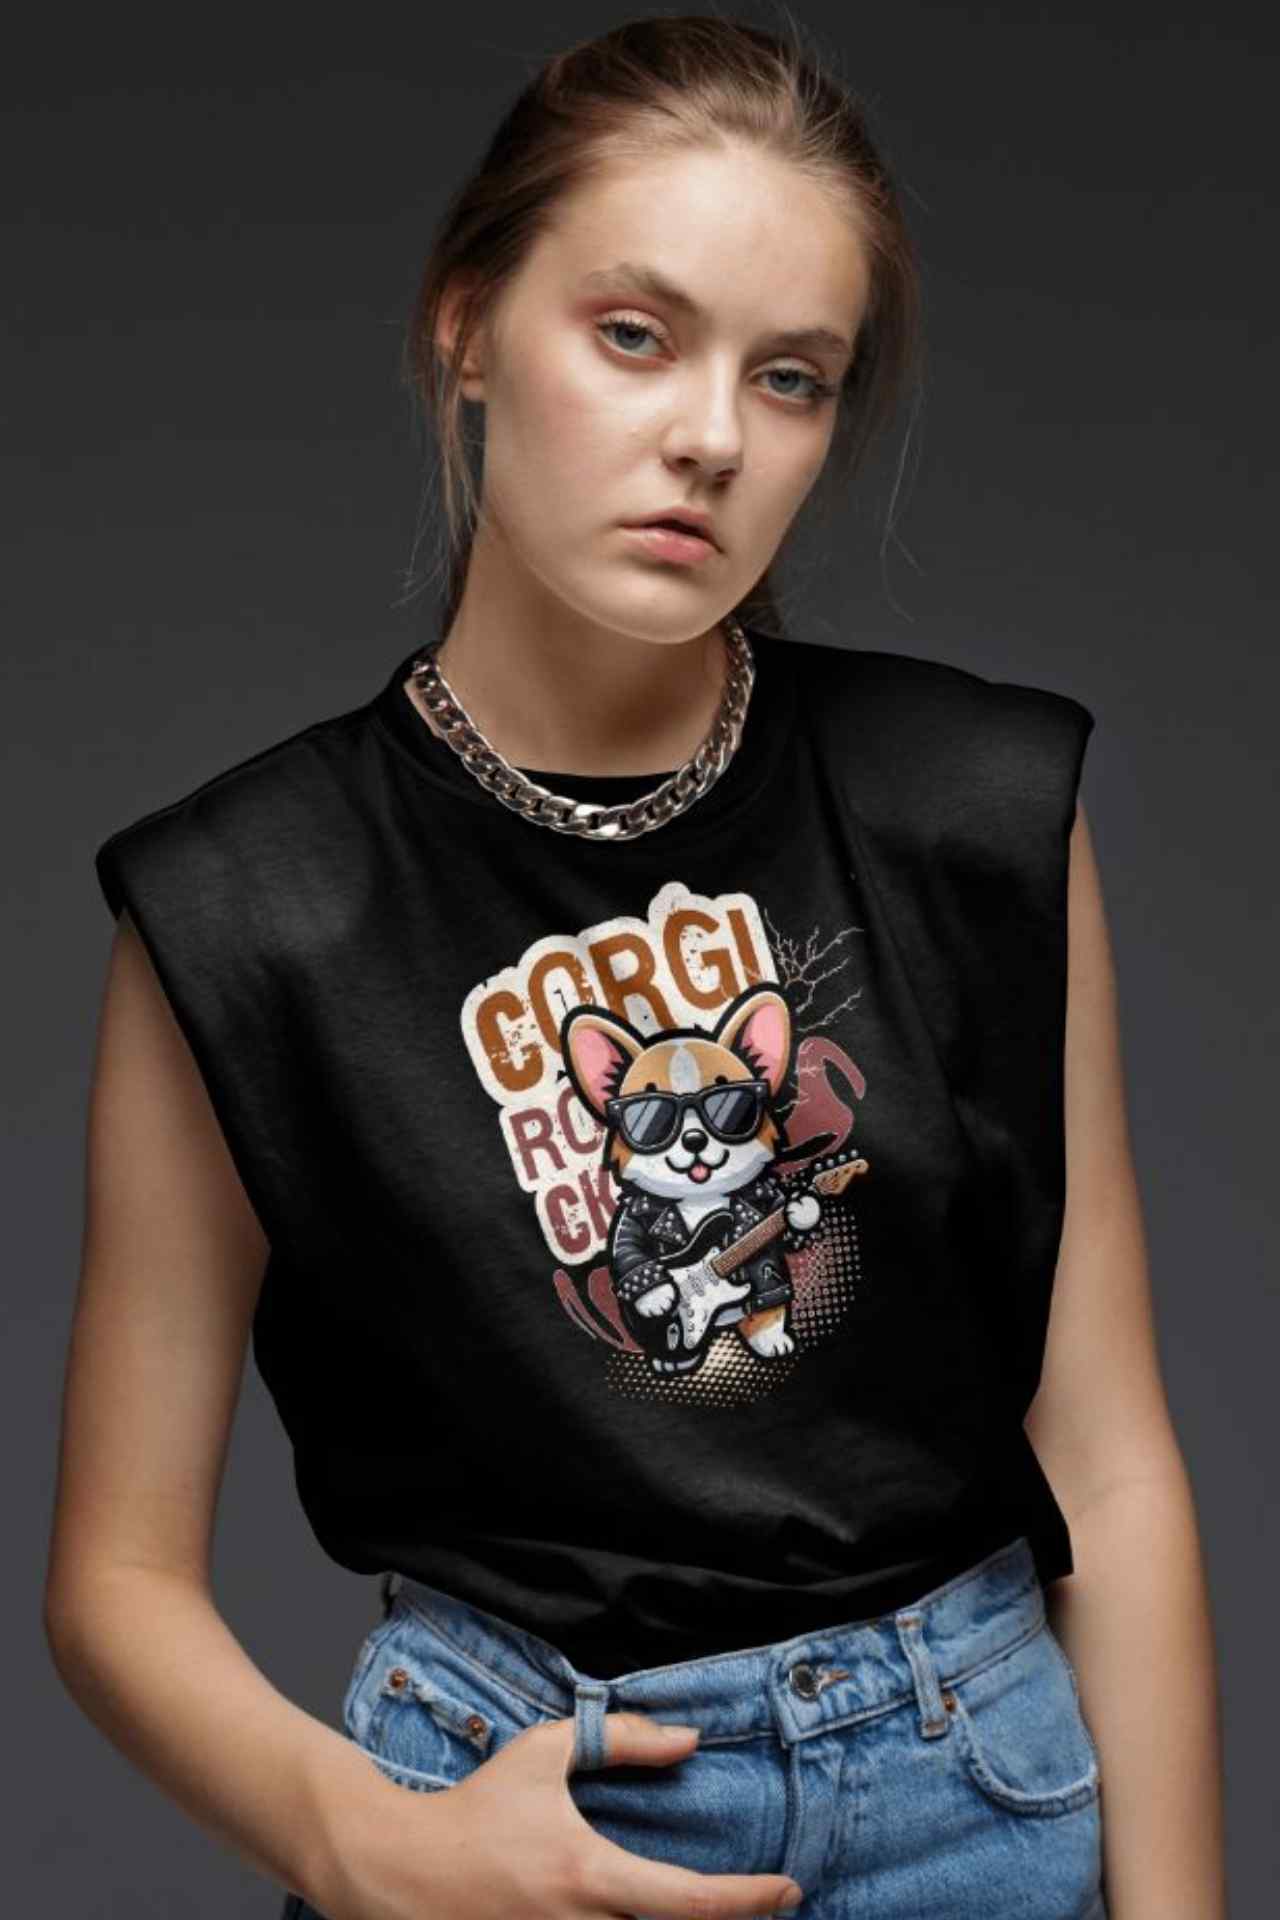 Corgi Rocker Cool Musician Shirt: The Ultimate Fashion Statement for Dog Lovers